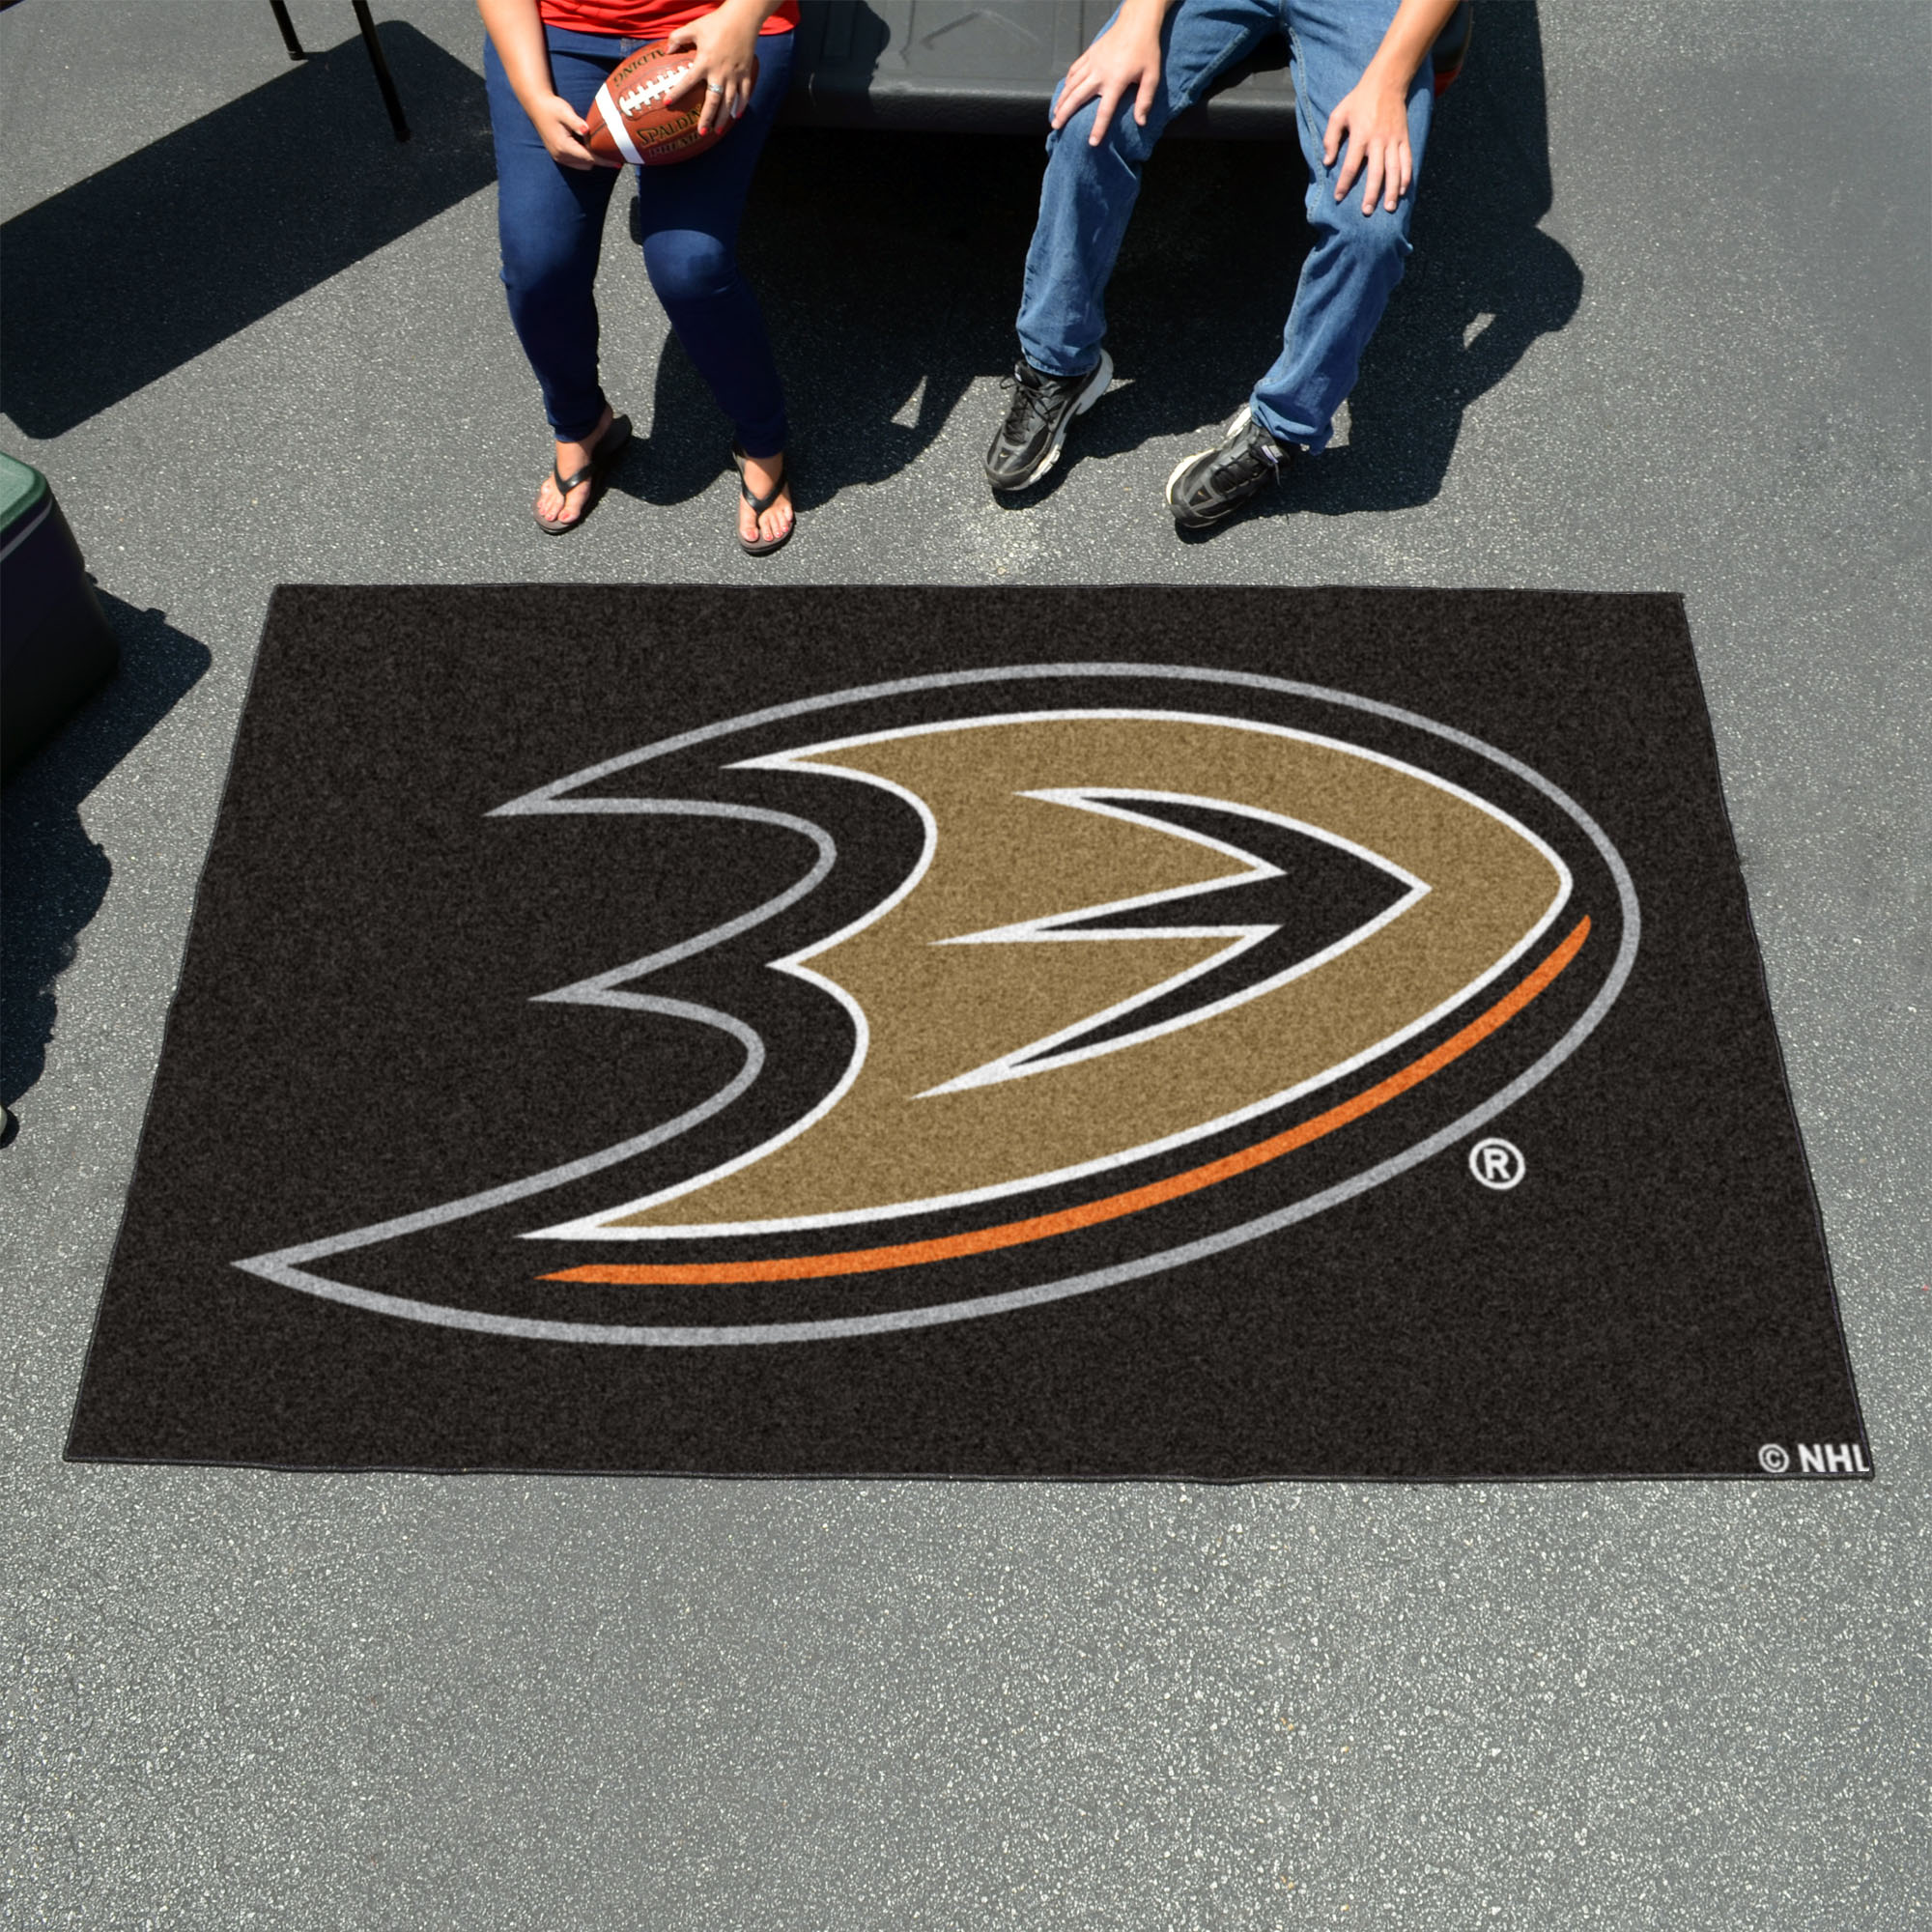 Fanmats NHL - Anaheim Ducks Ulti-Mat 5' x 8' - image 2 of 2